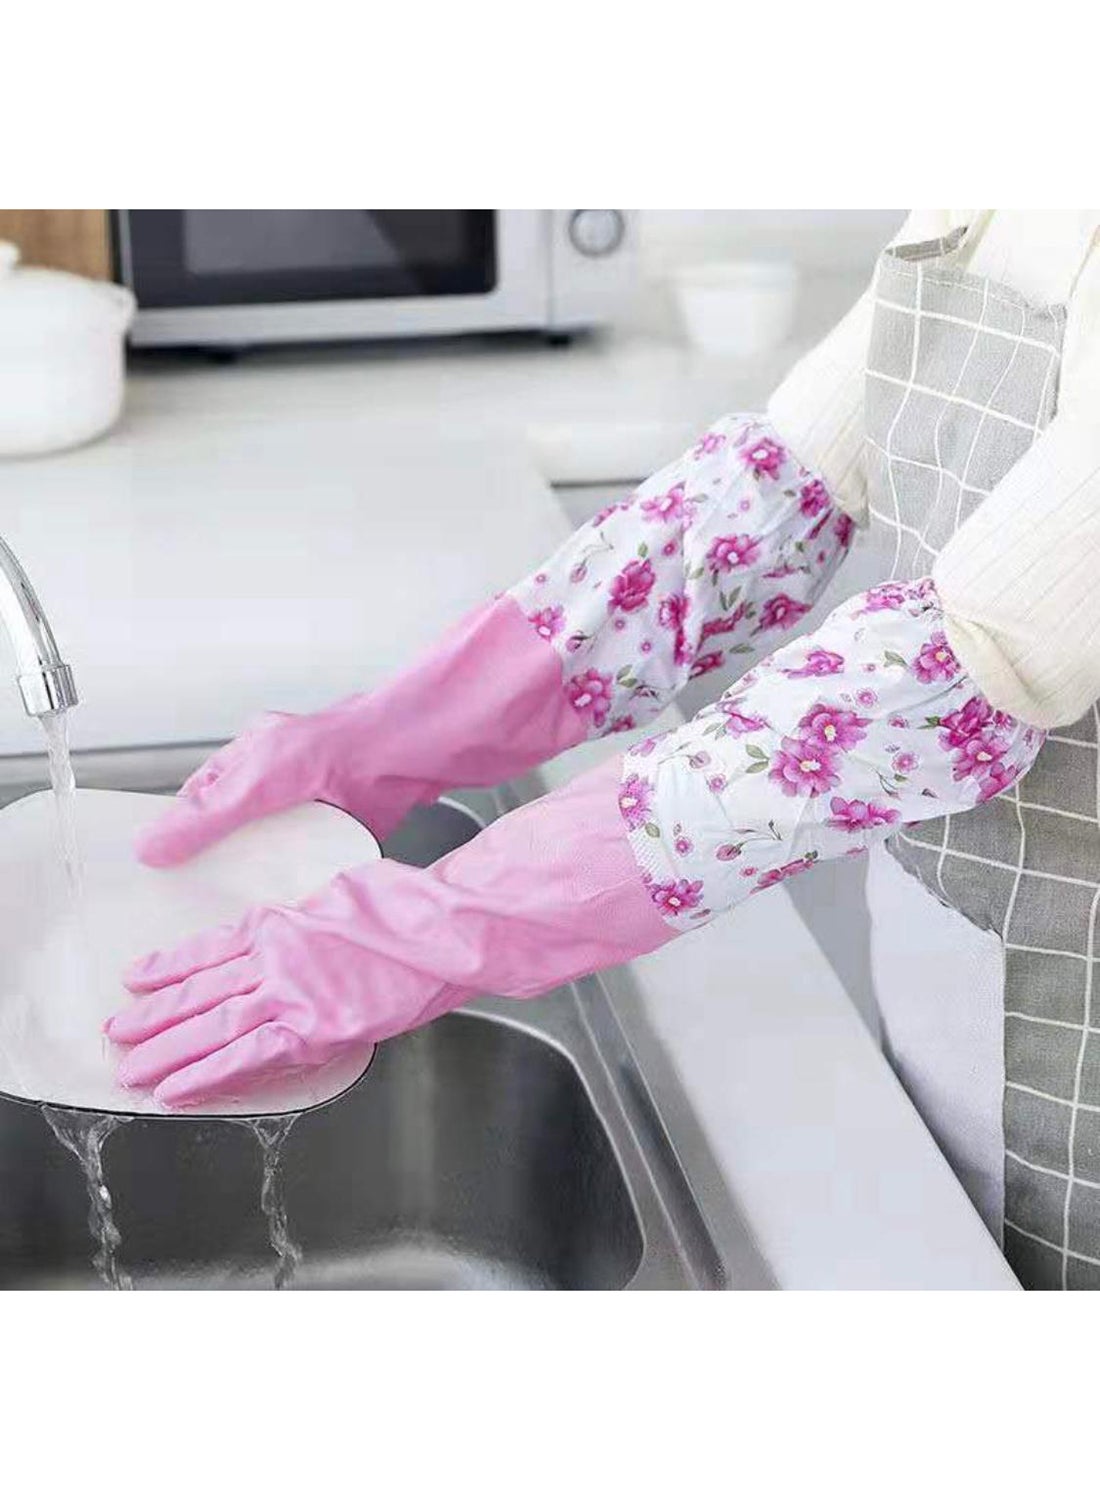 2-Piece Reusable Washing Gloves Set Multicolour One Size